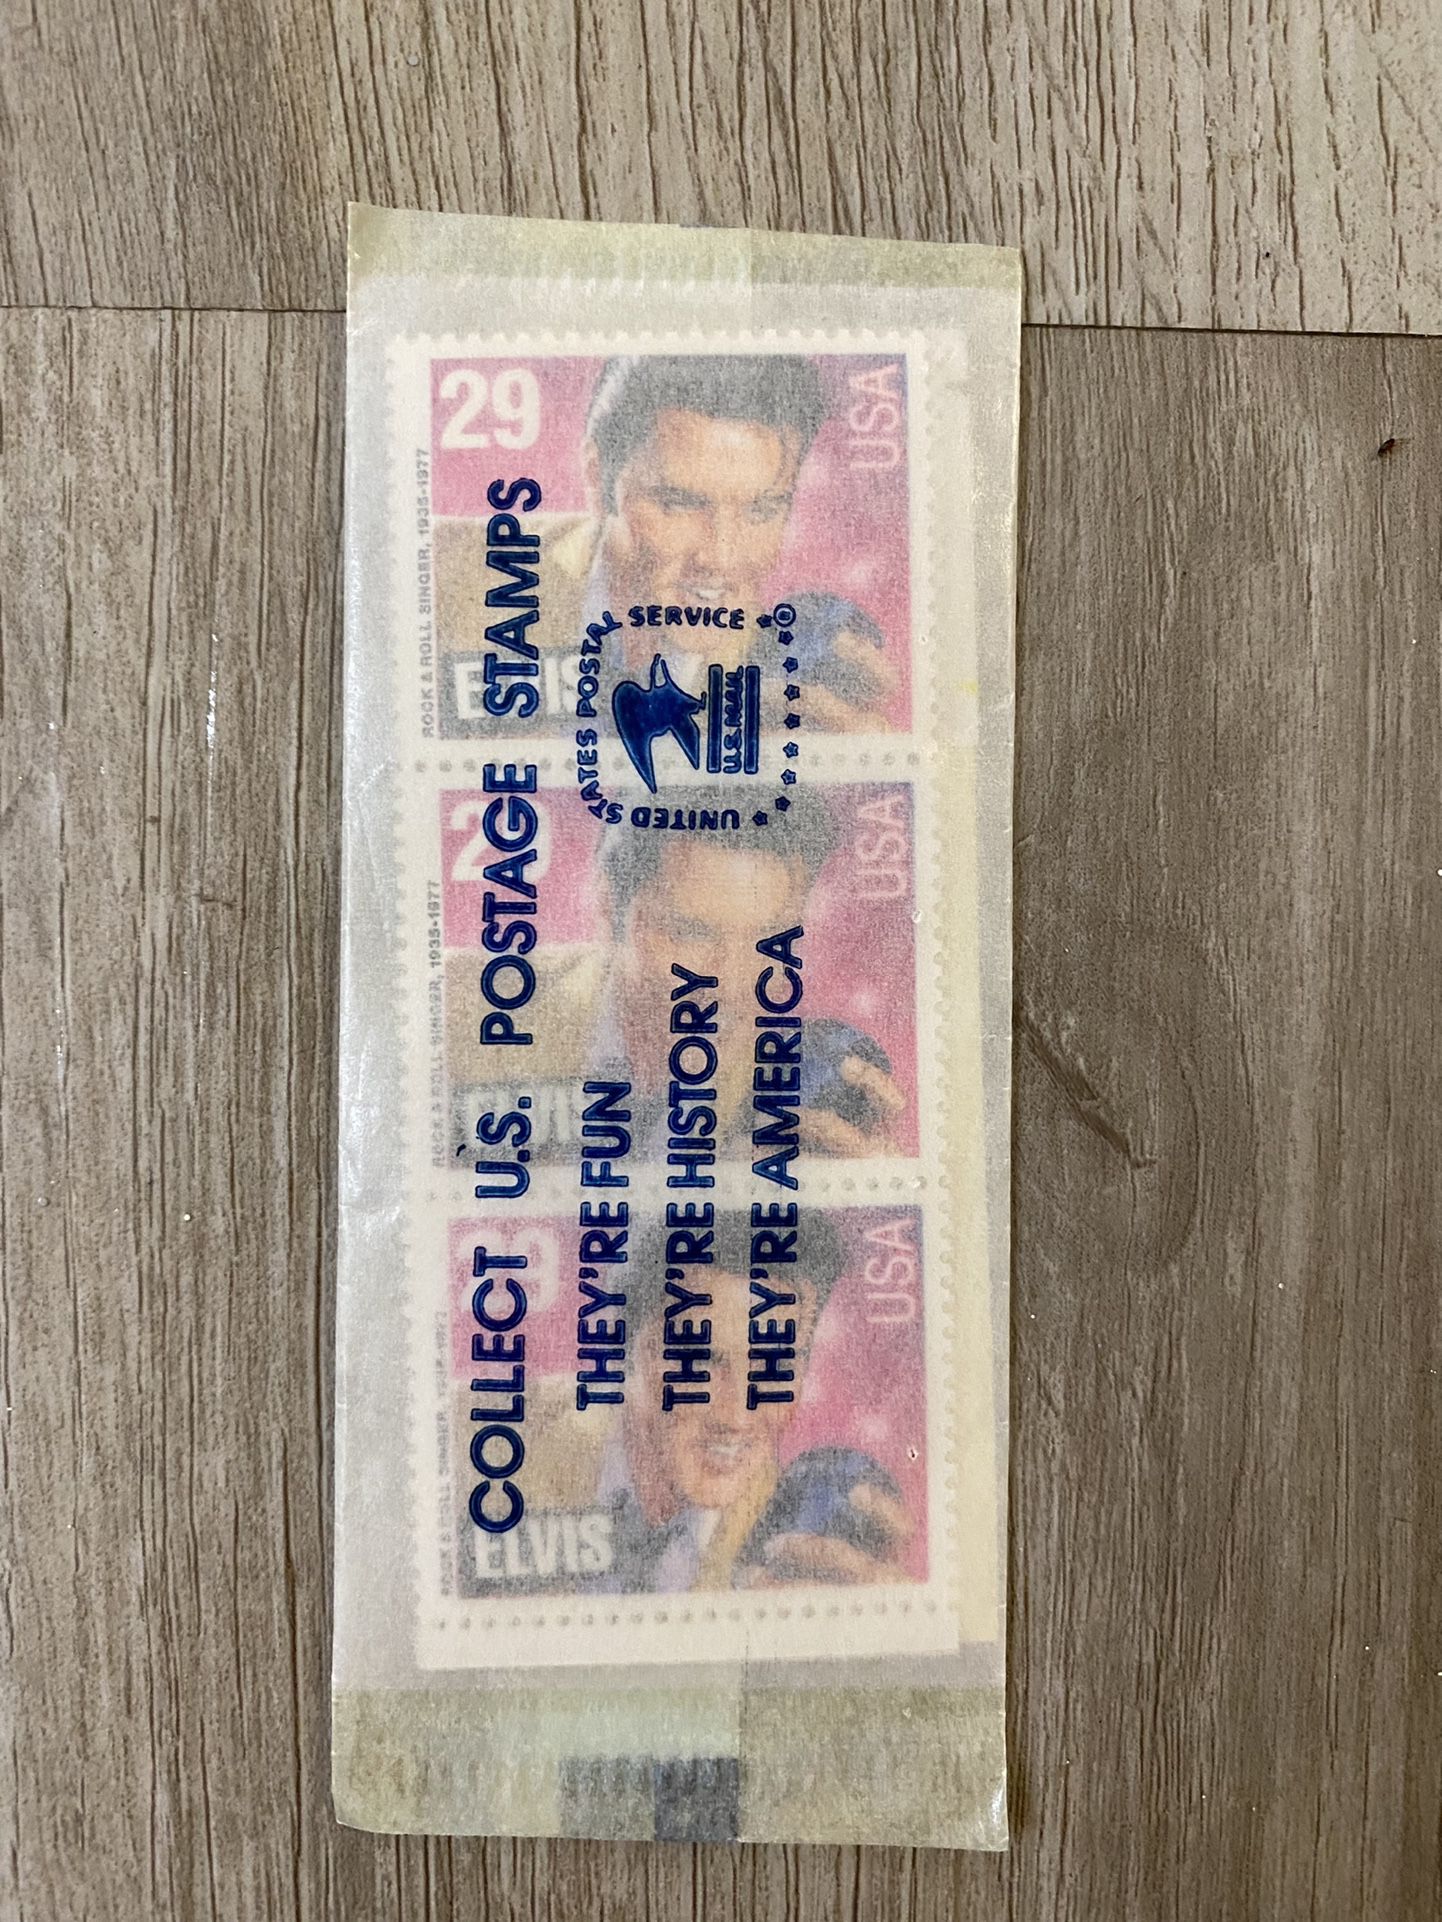 Elvis Presley Stamps 1993 $.29 Unopened 20 Stamps